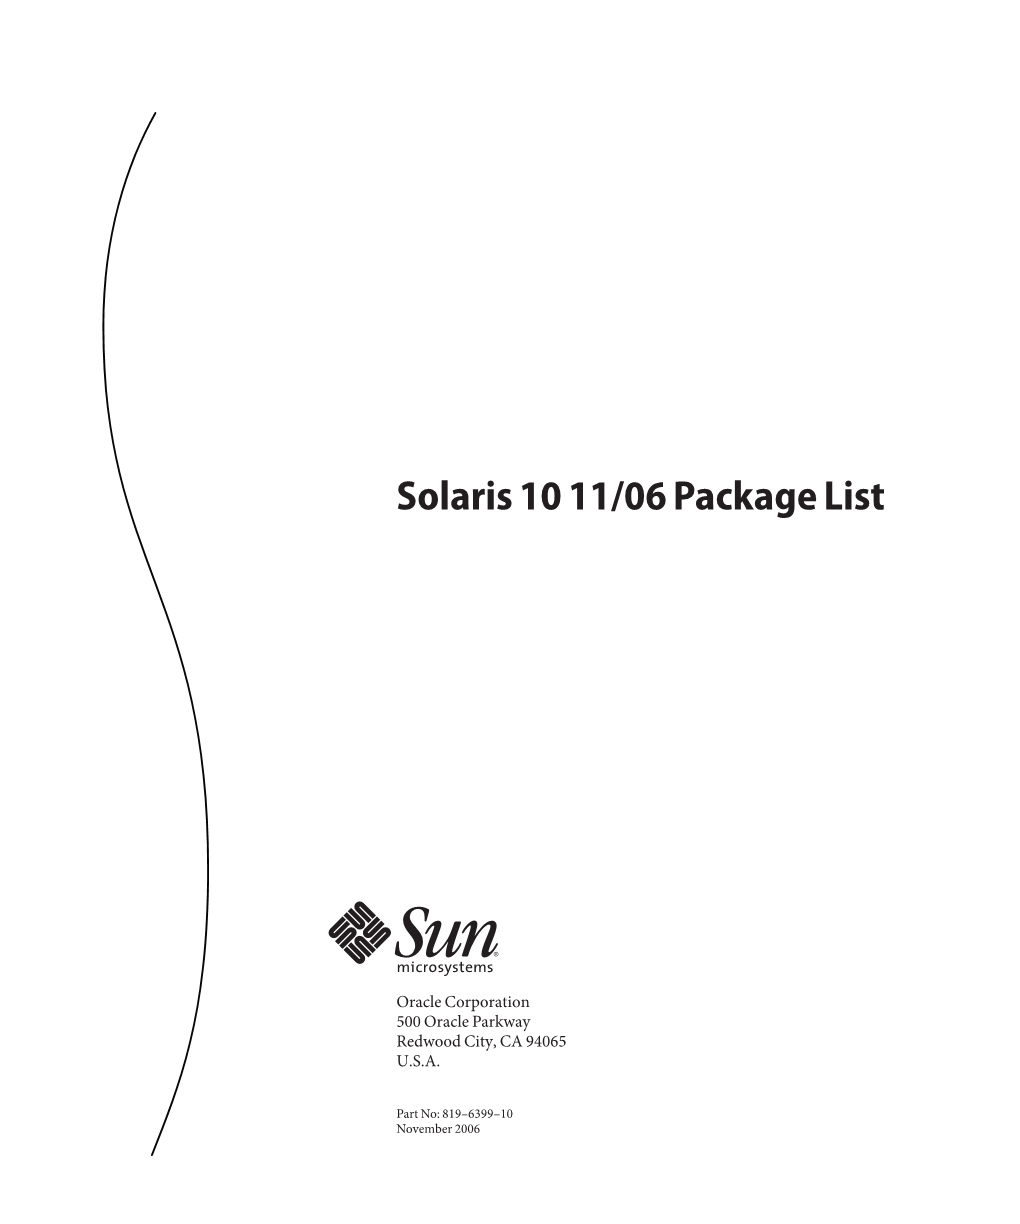 Solaris 10 1106 Package List